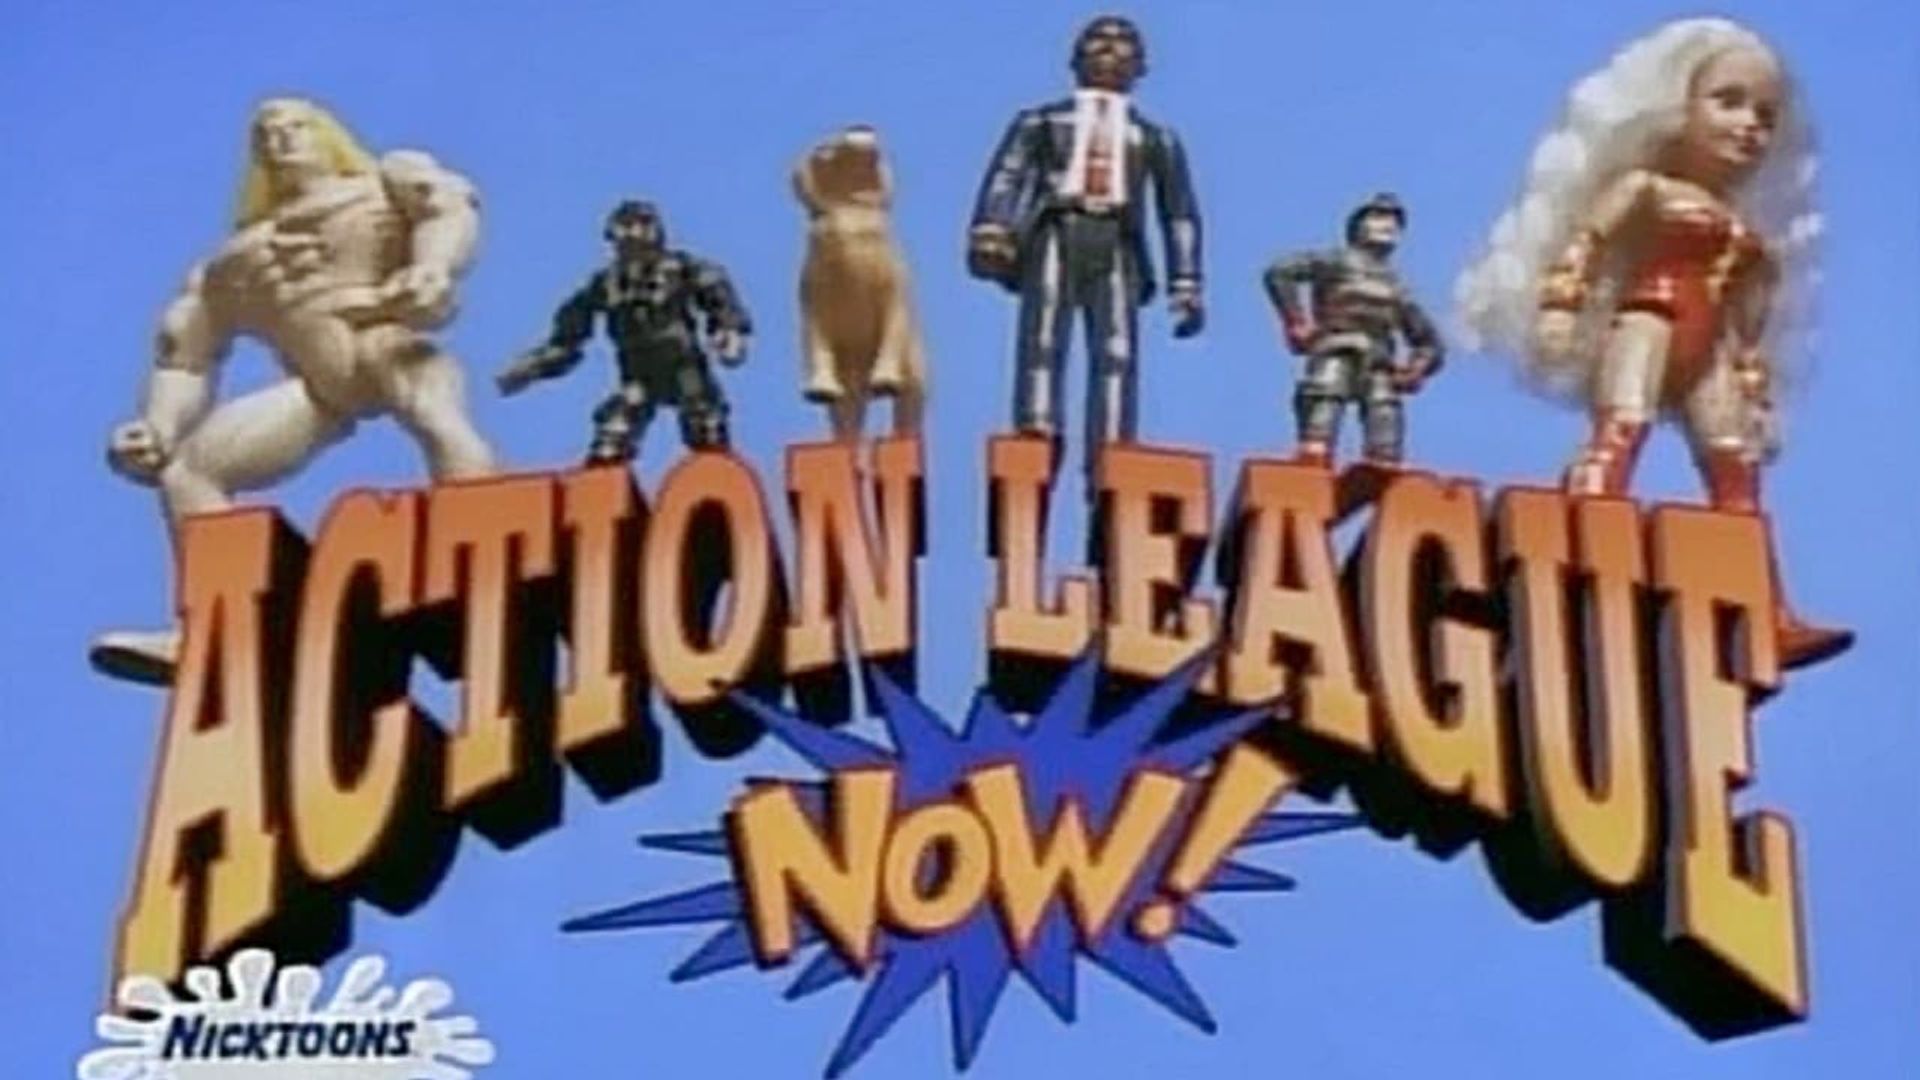 Action League Now!! background